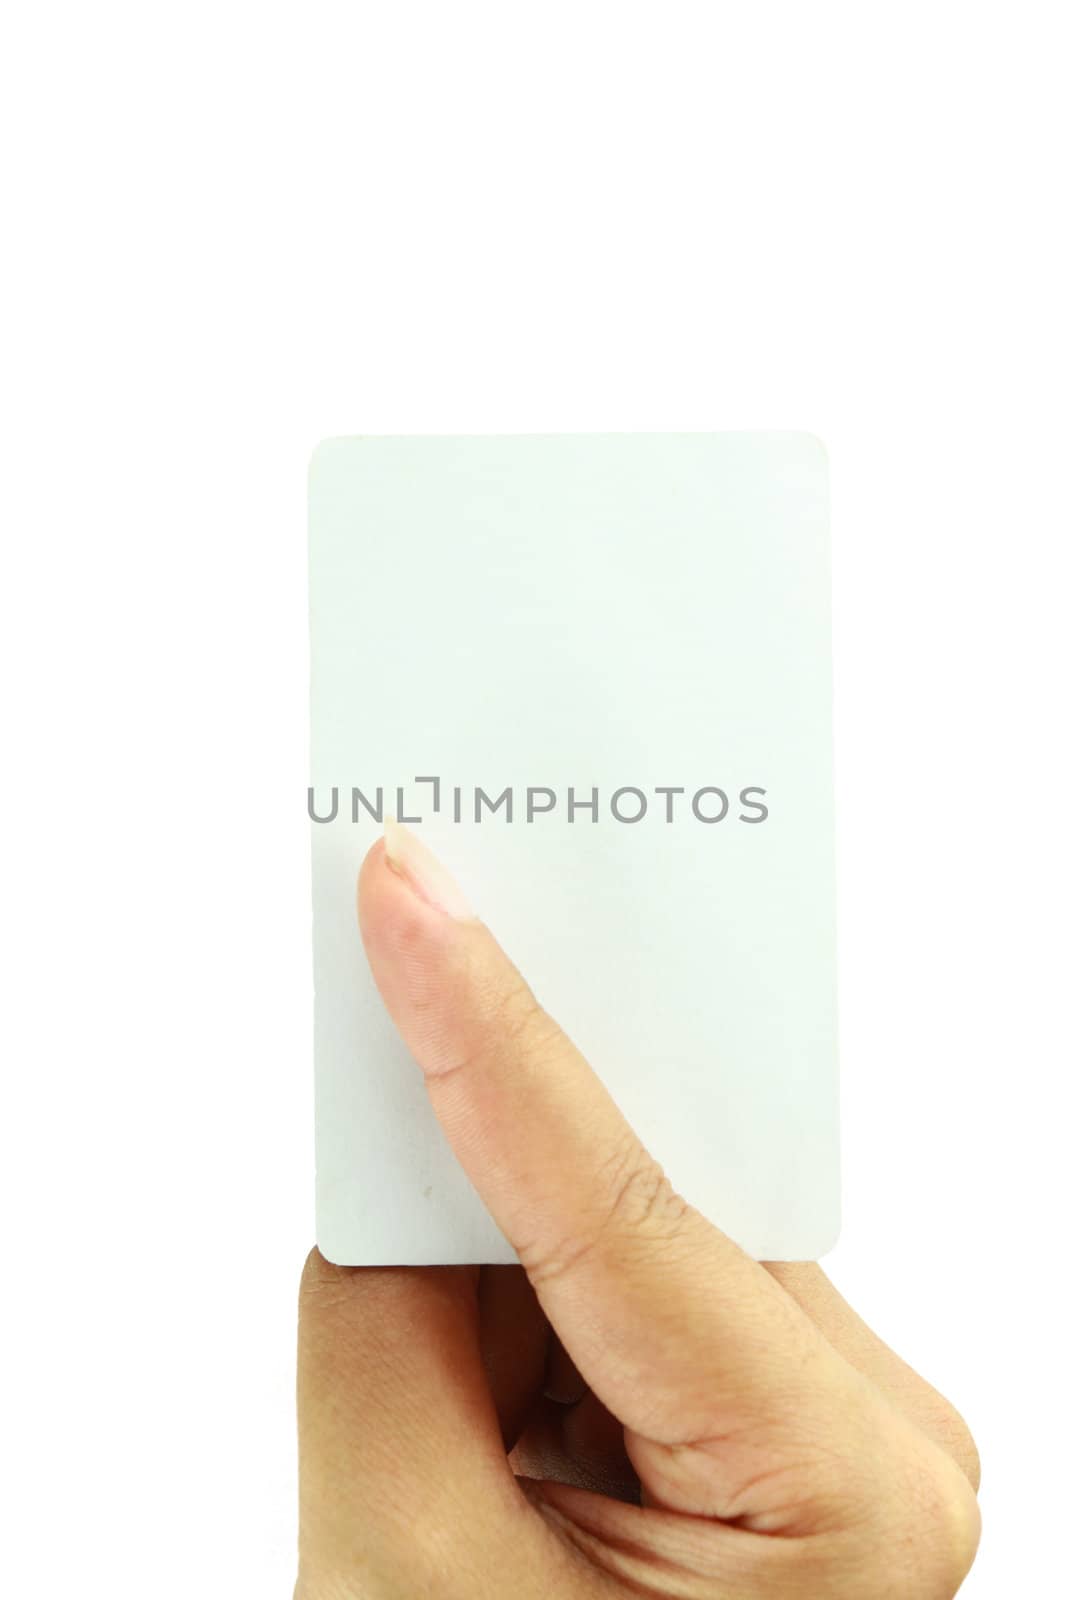 blank business card on white background. by bajita111122